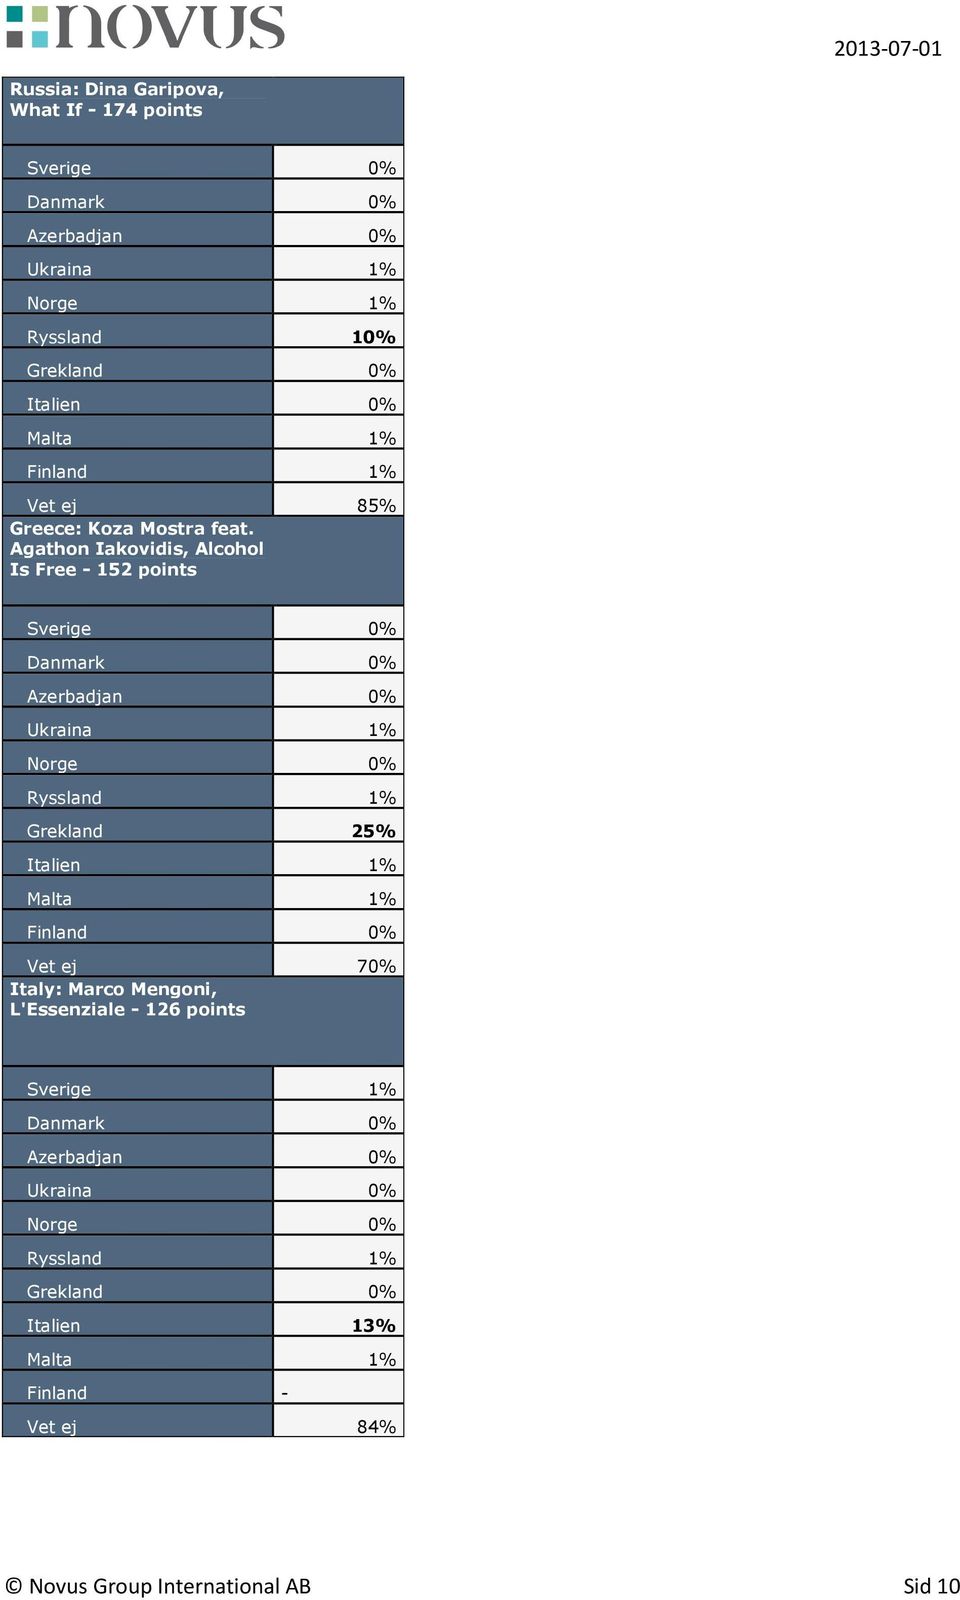 Agathon Iakovidis, Alcohol Is Free - 152 points Danmark 0% Azerbadjan 0% Ukraina 1% Norge 0% Ryssland 1% Grekland 25% Italien 1% Malta